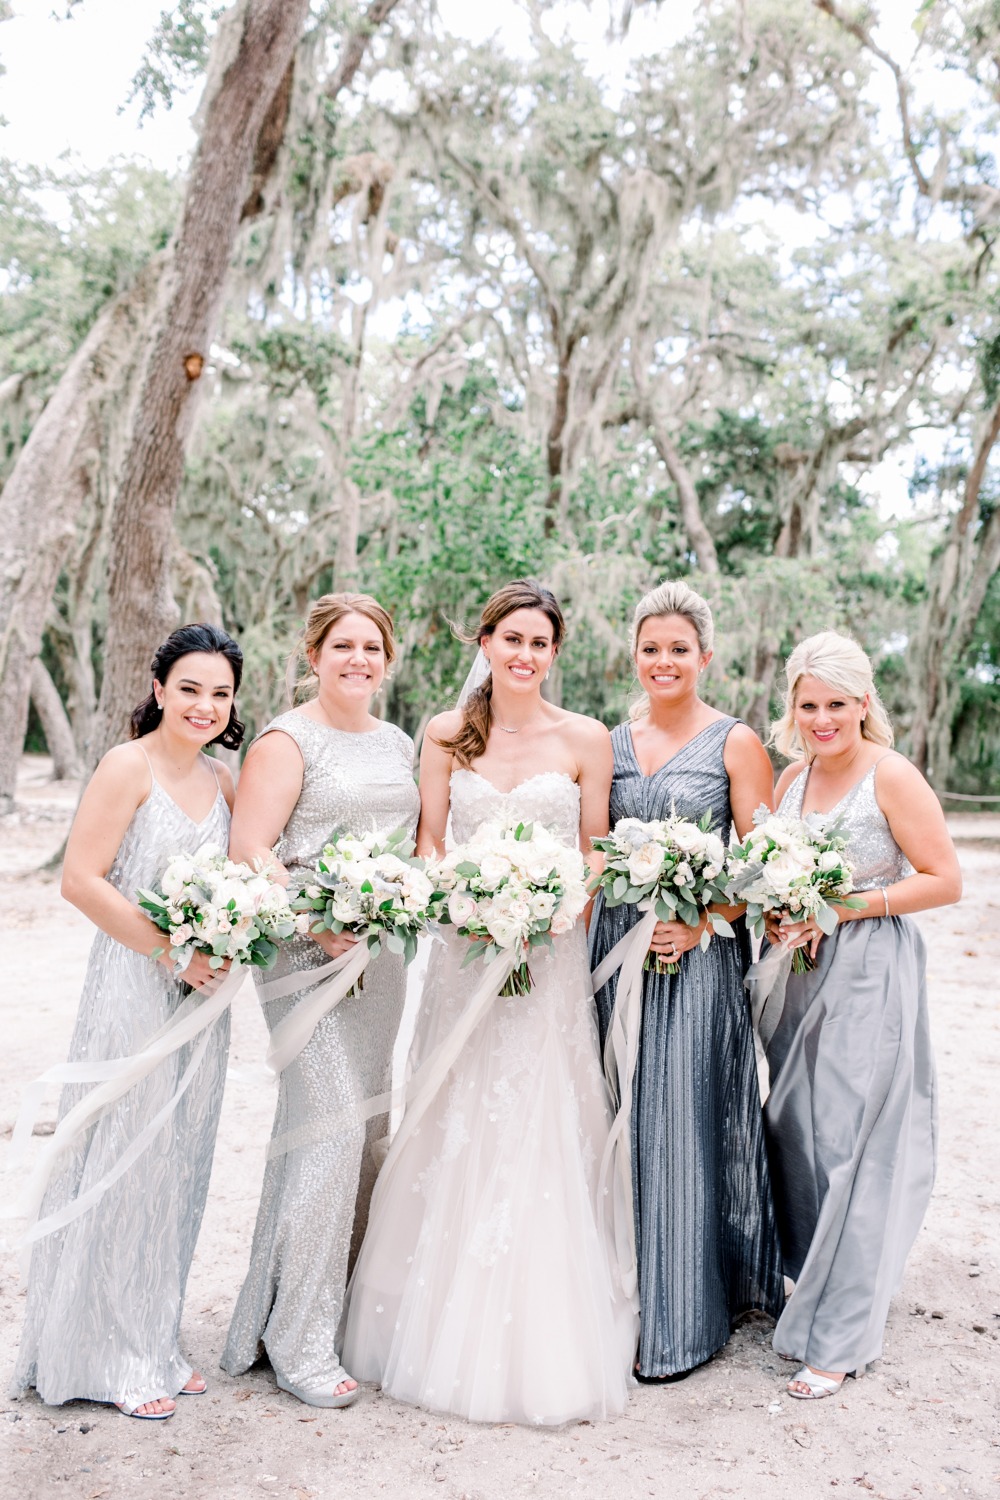 Silver bridesmaid dresses